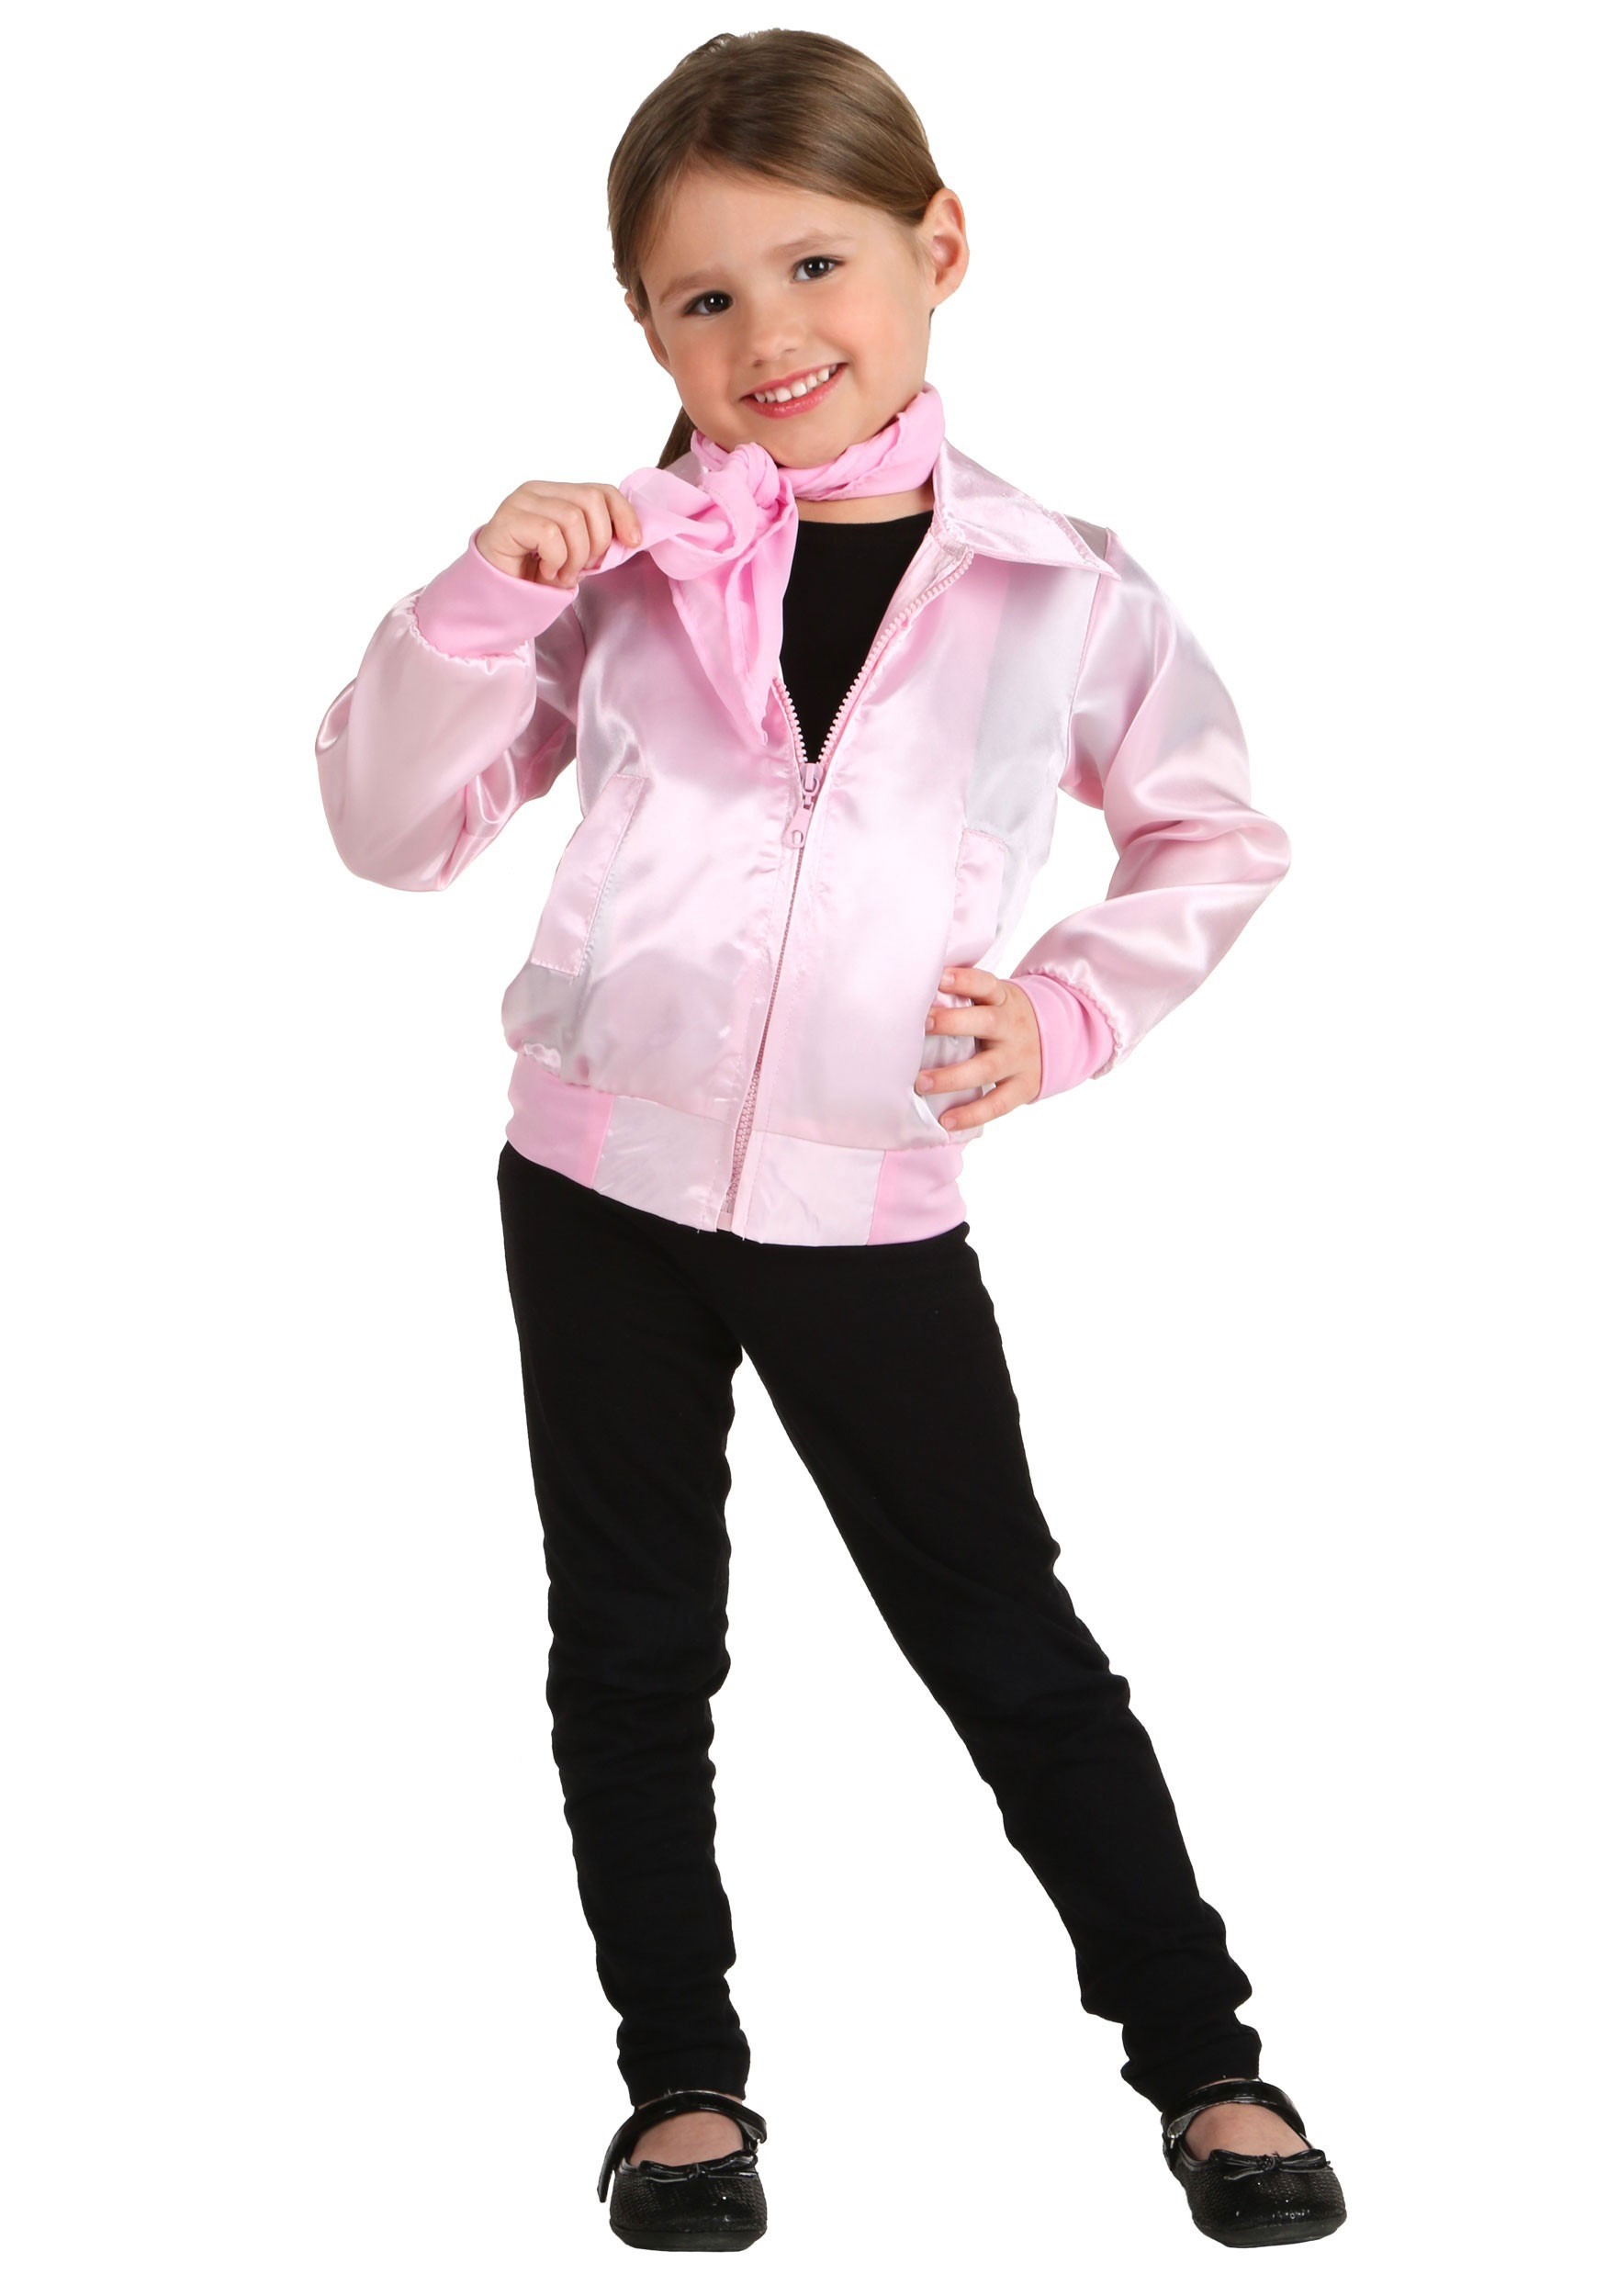 Photos - Fancy Dress Toddler FUN Costumes  Pink Ladies Grease Jacket Costume Black/Pink GRE6 